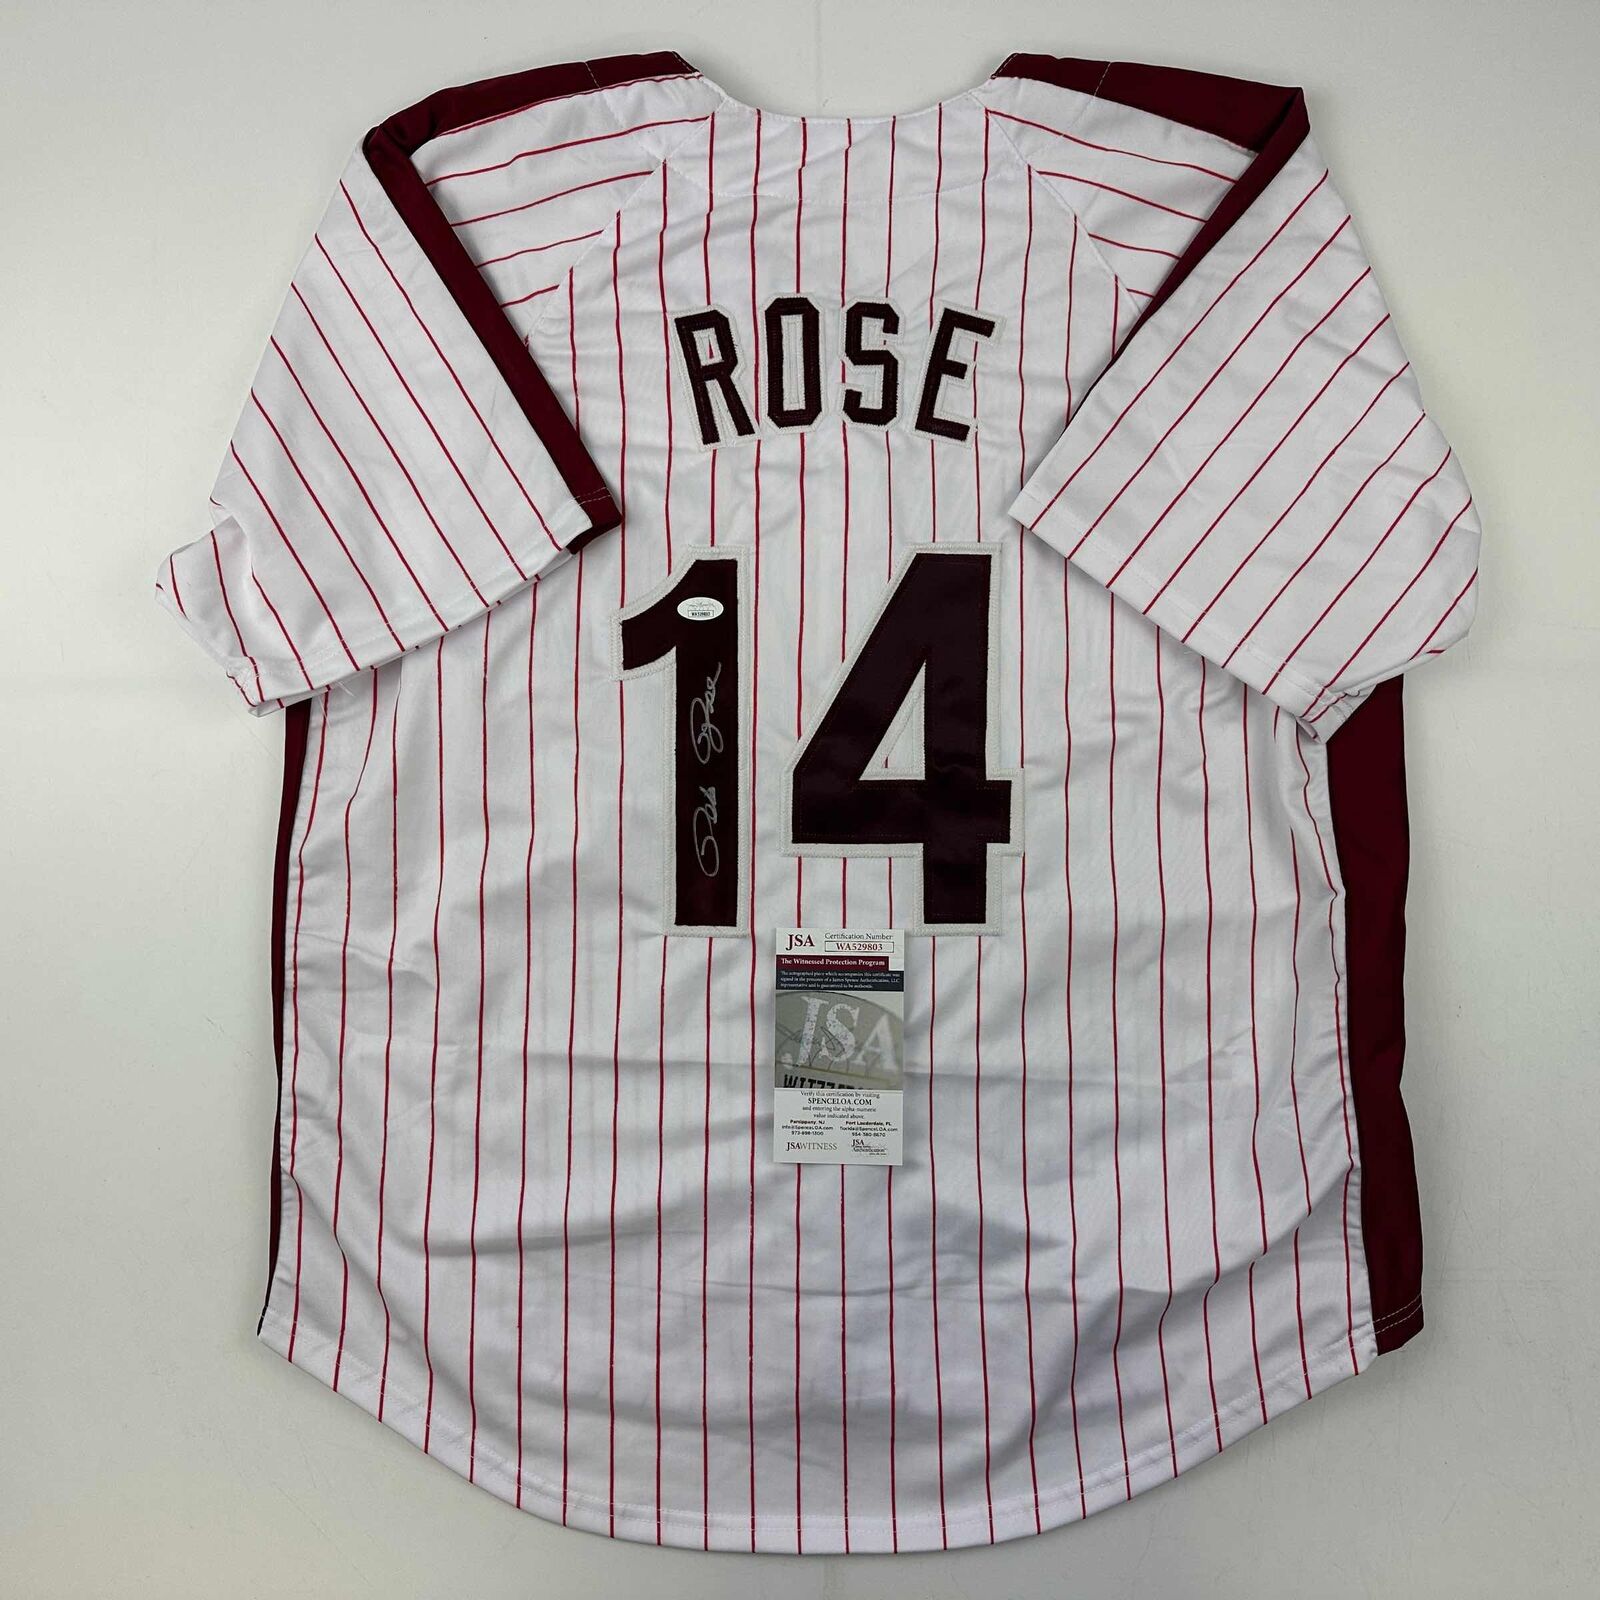 Autographed/Signed Pete Rose Philadelphia Pinstripe Baseball